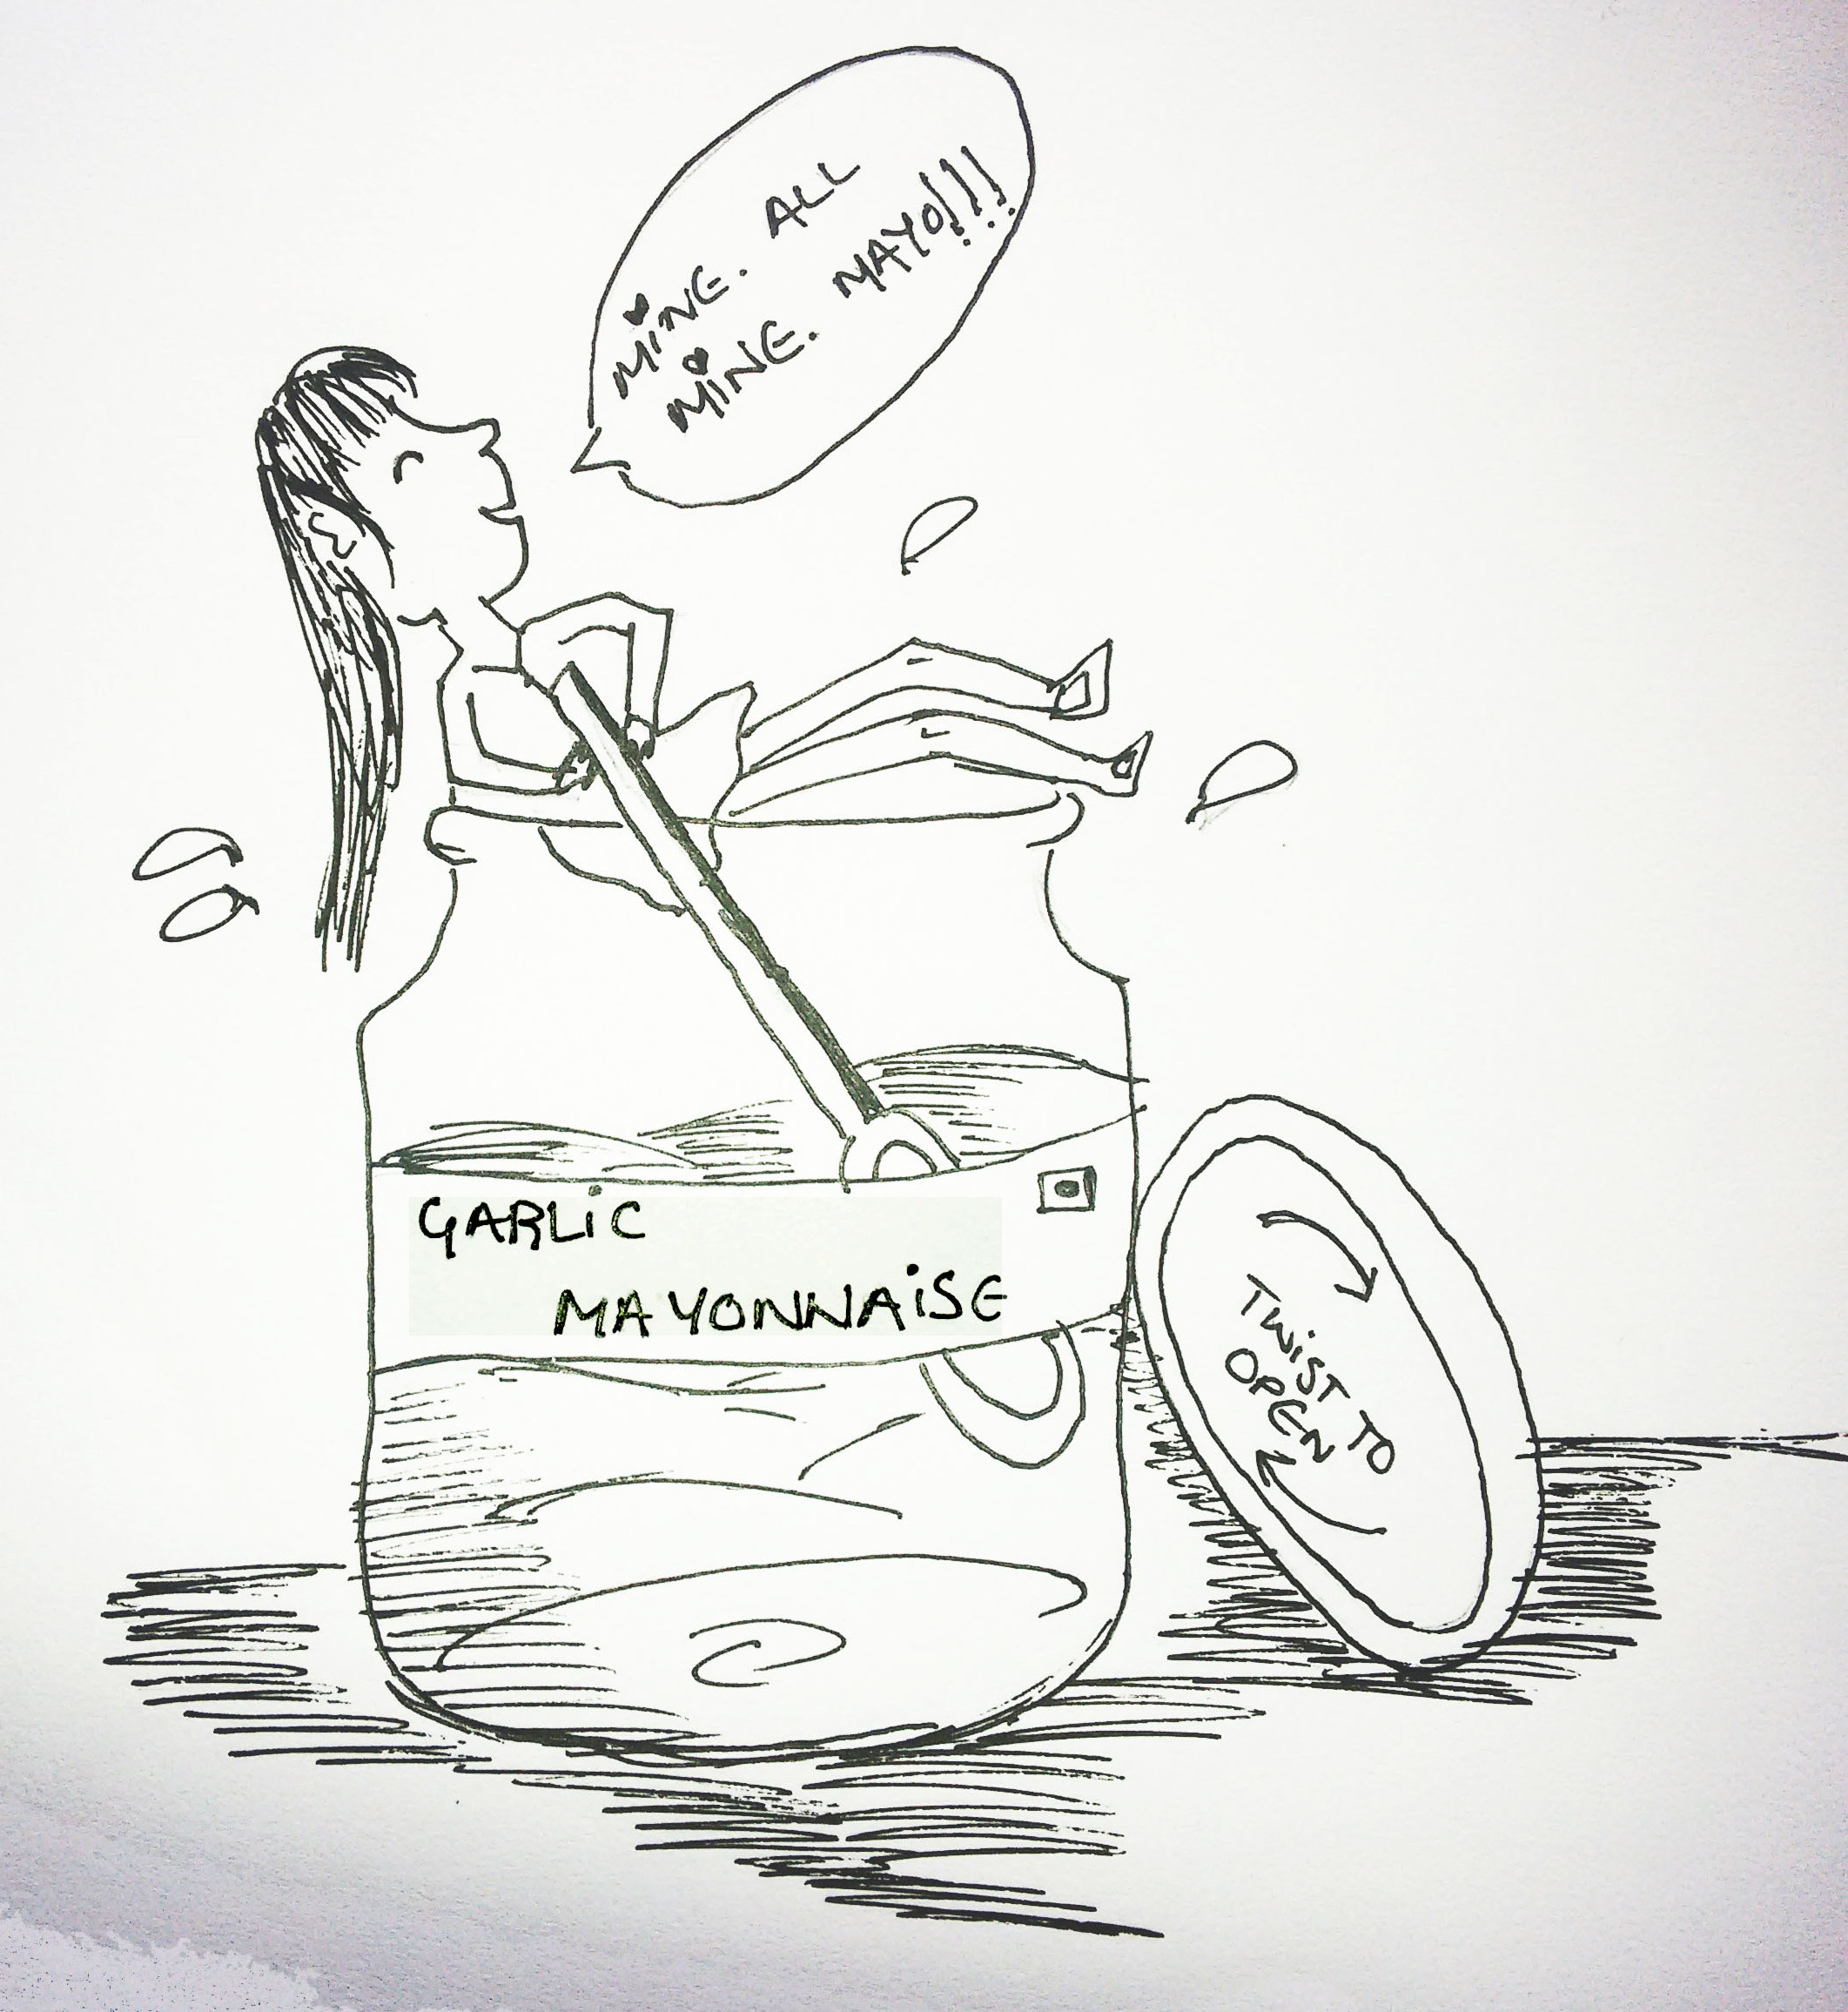 N relishing the stolen mayonnaise. Illustration by Vismaya Vishwa 